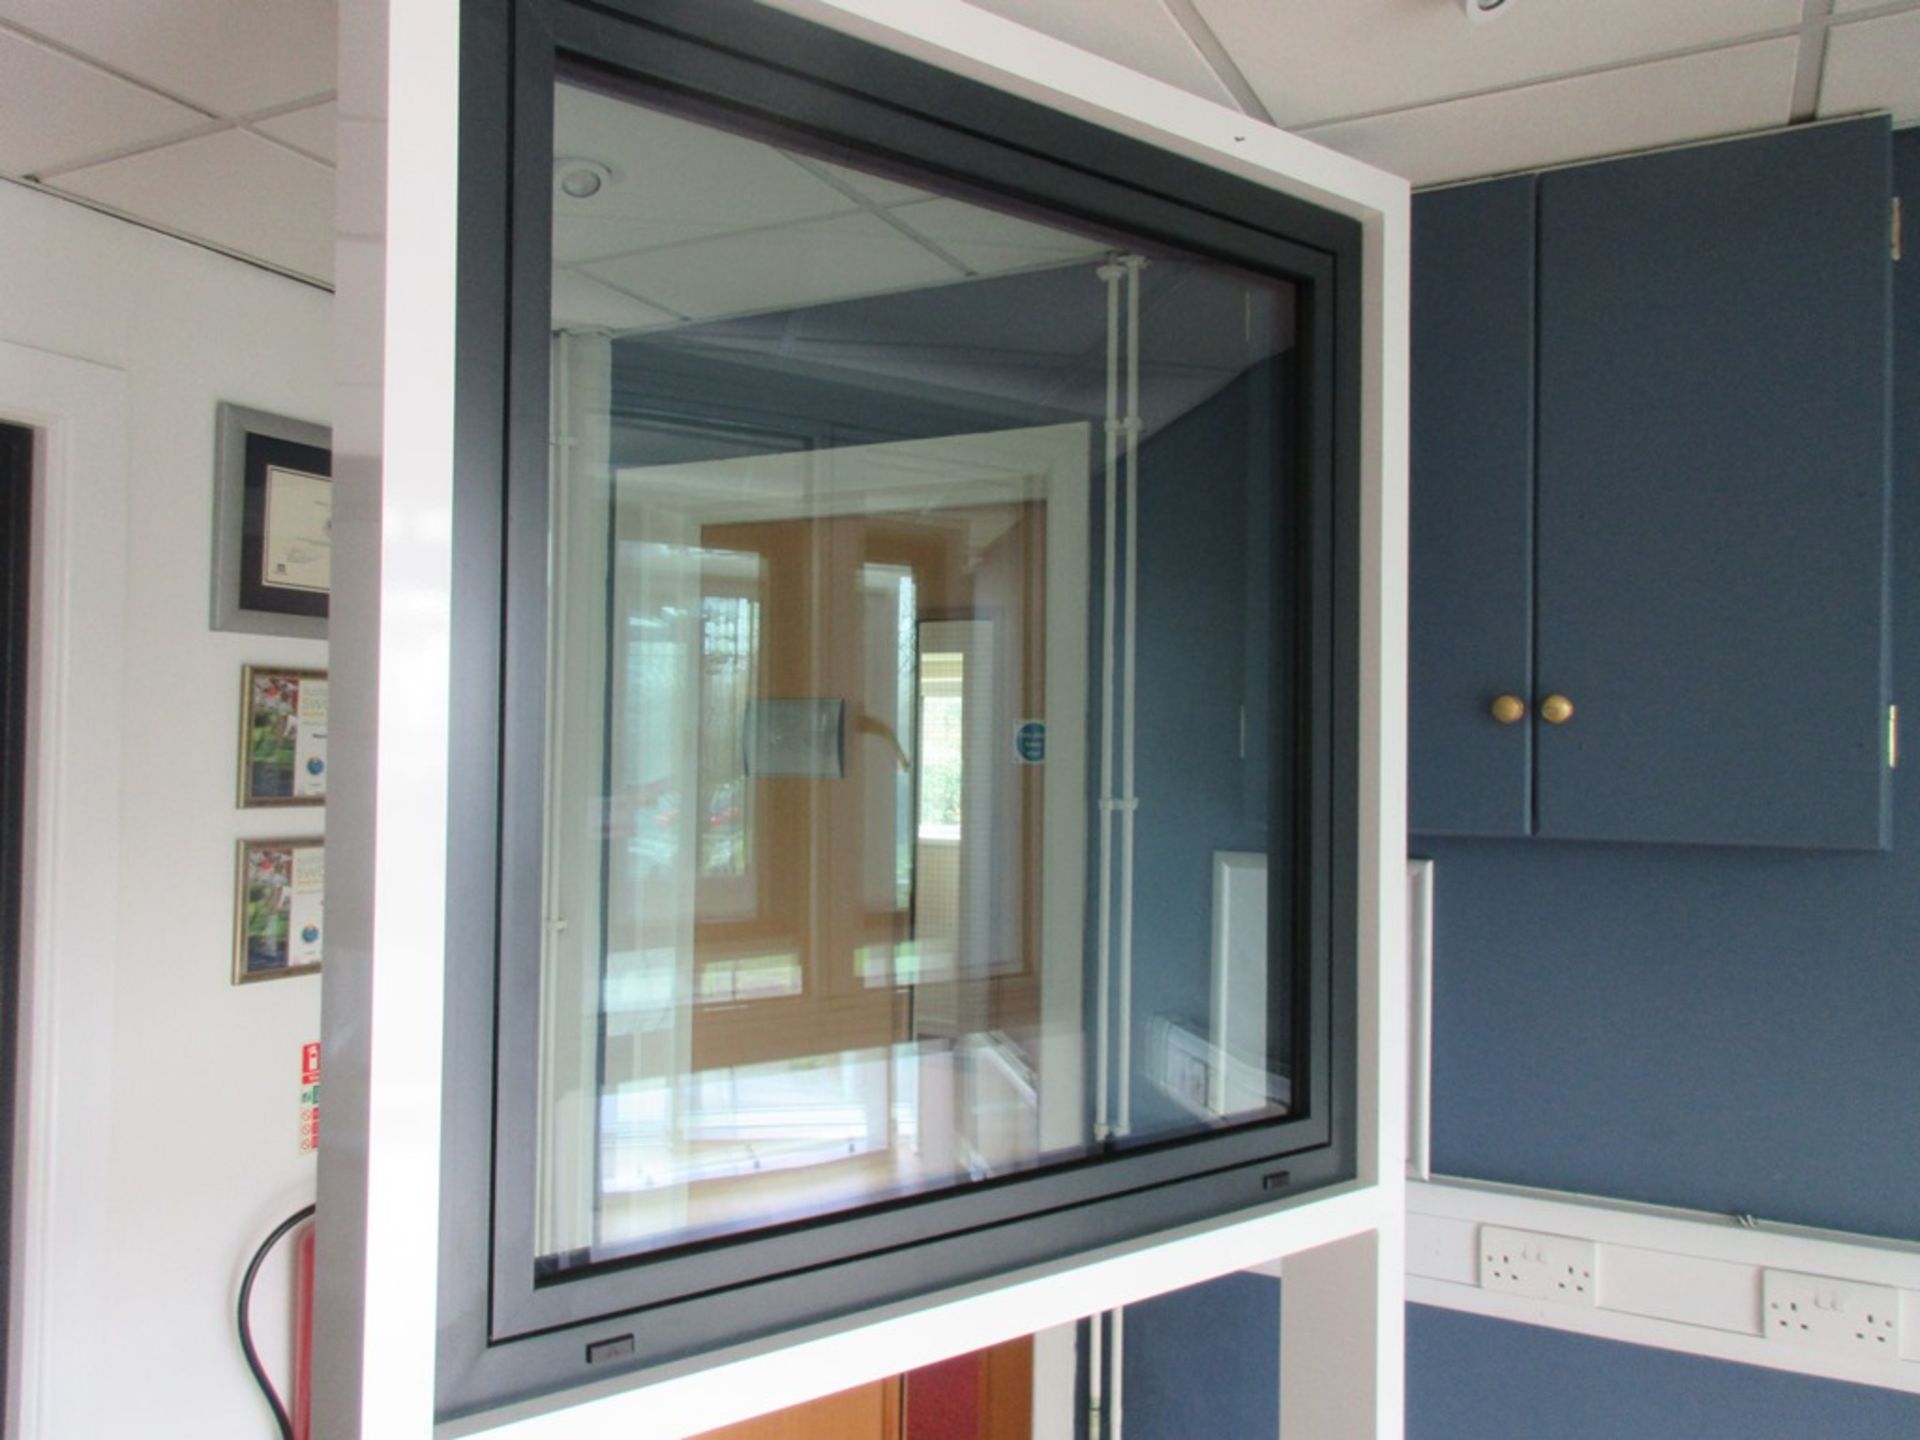 Aluminium framed single door showroom window